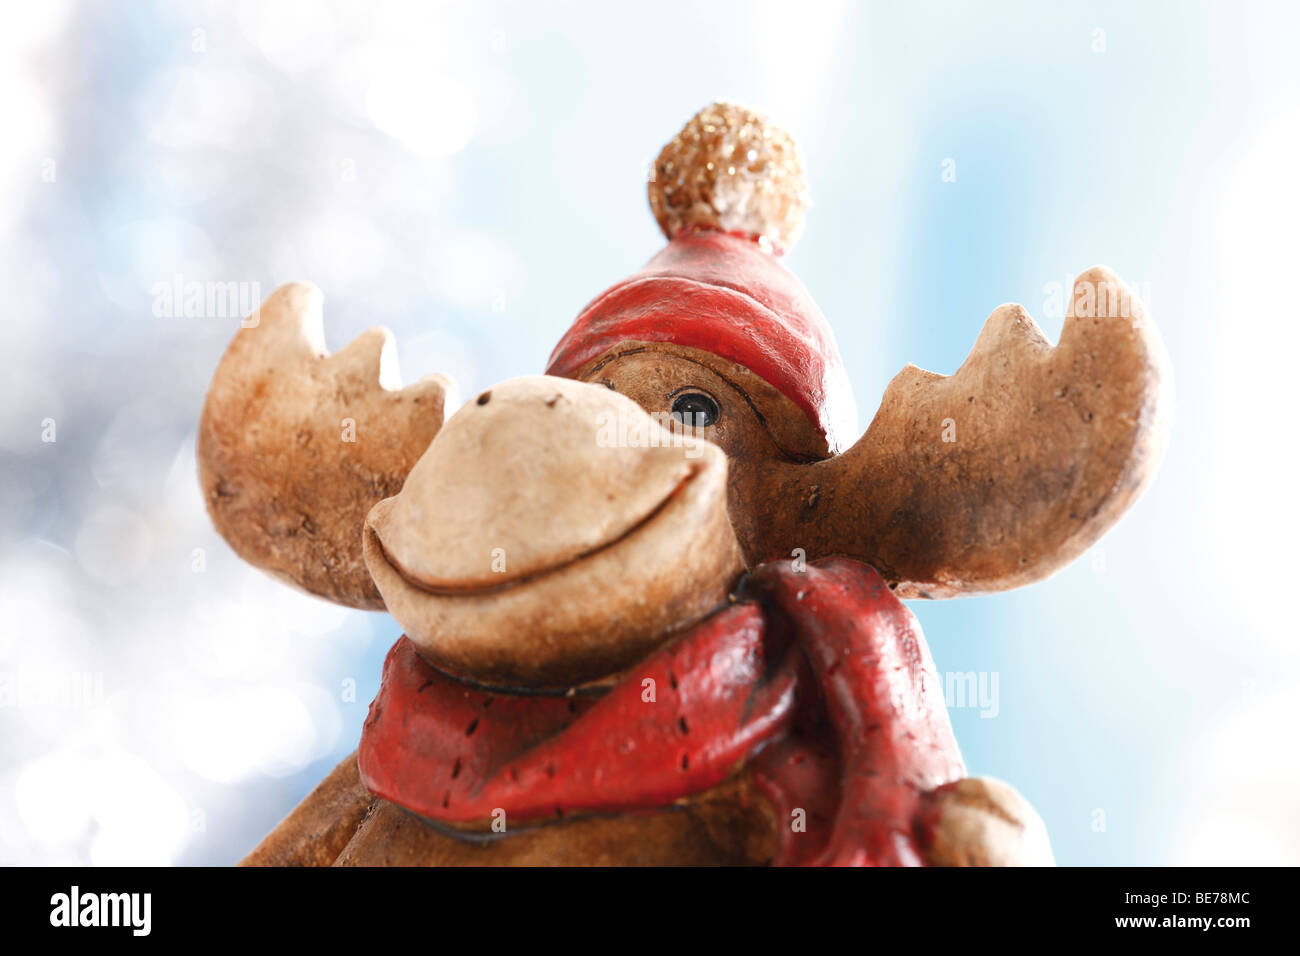 Moose, reindeer, Christmas decoration Stock Photo